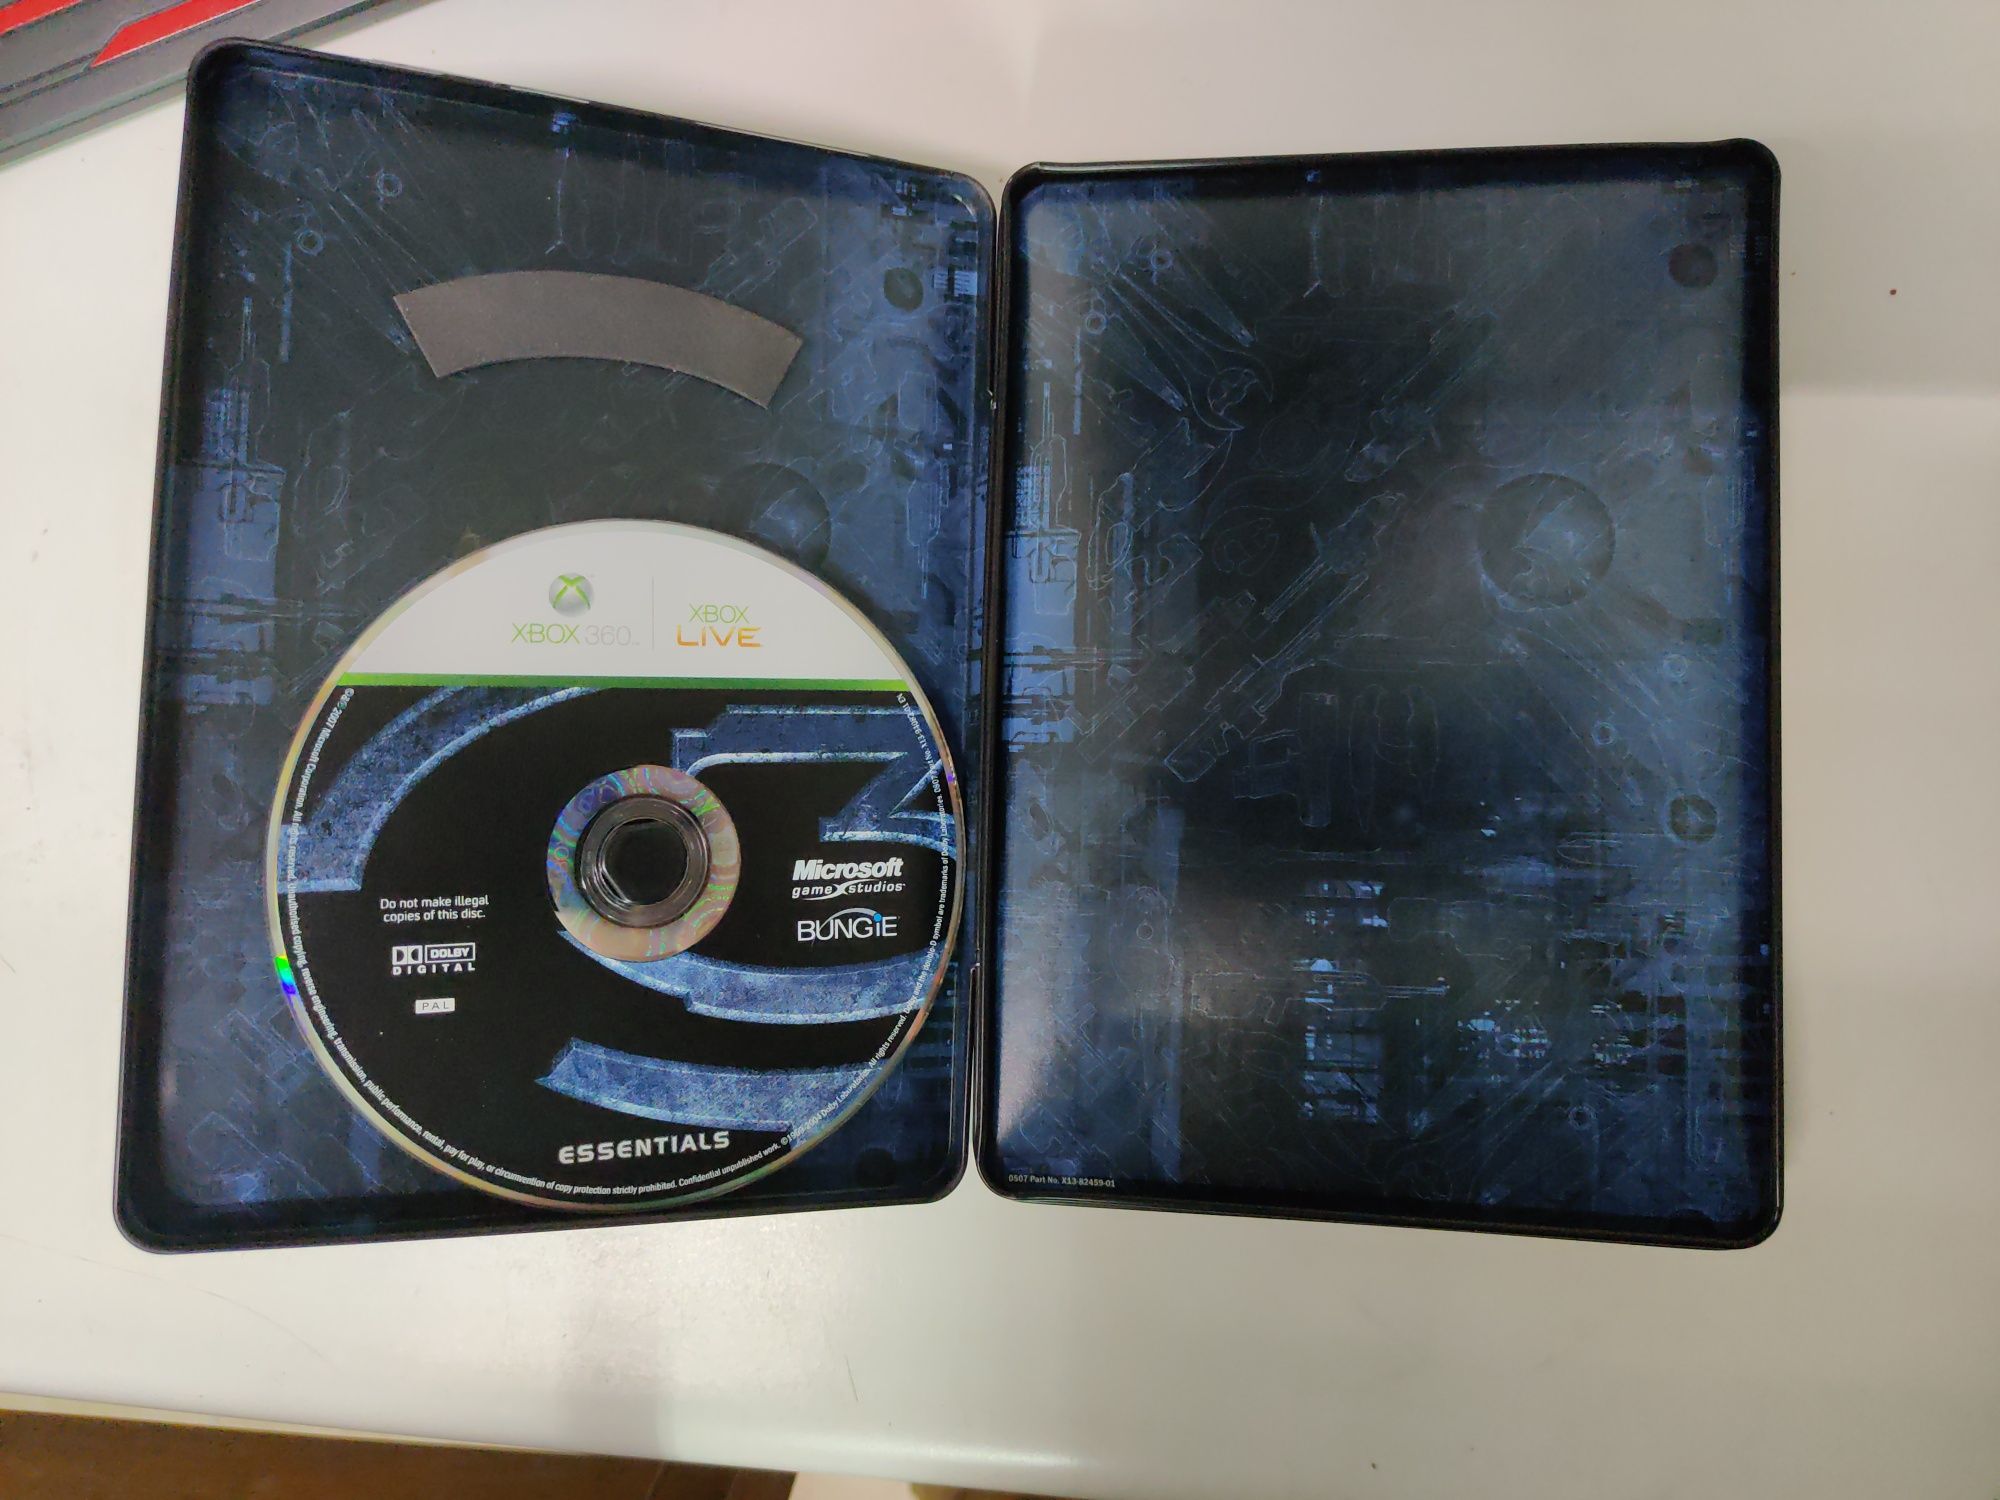 Halo 3 Limited Ed. w/Artbook (2 Disc)